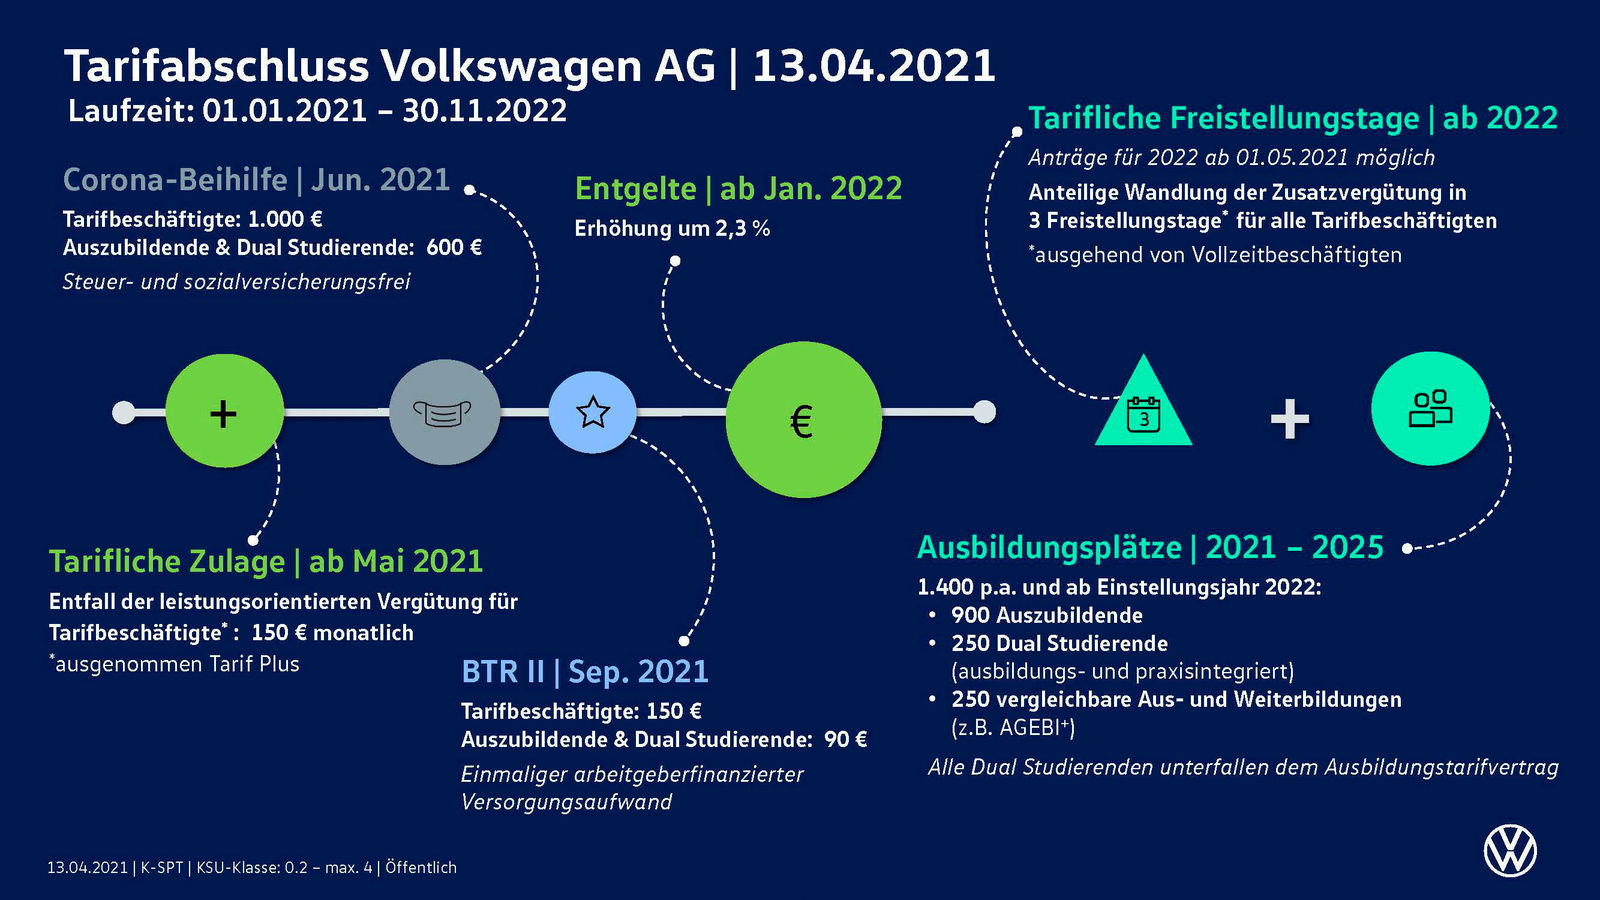 Tarifabschluss bei der Volkswagen AG